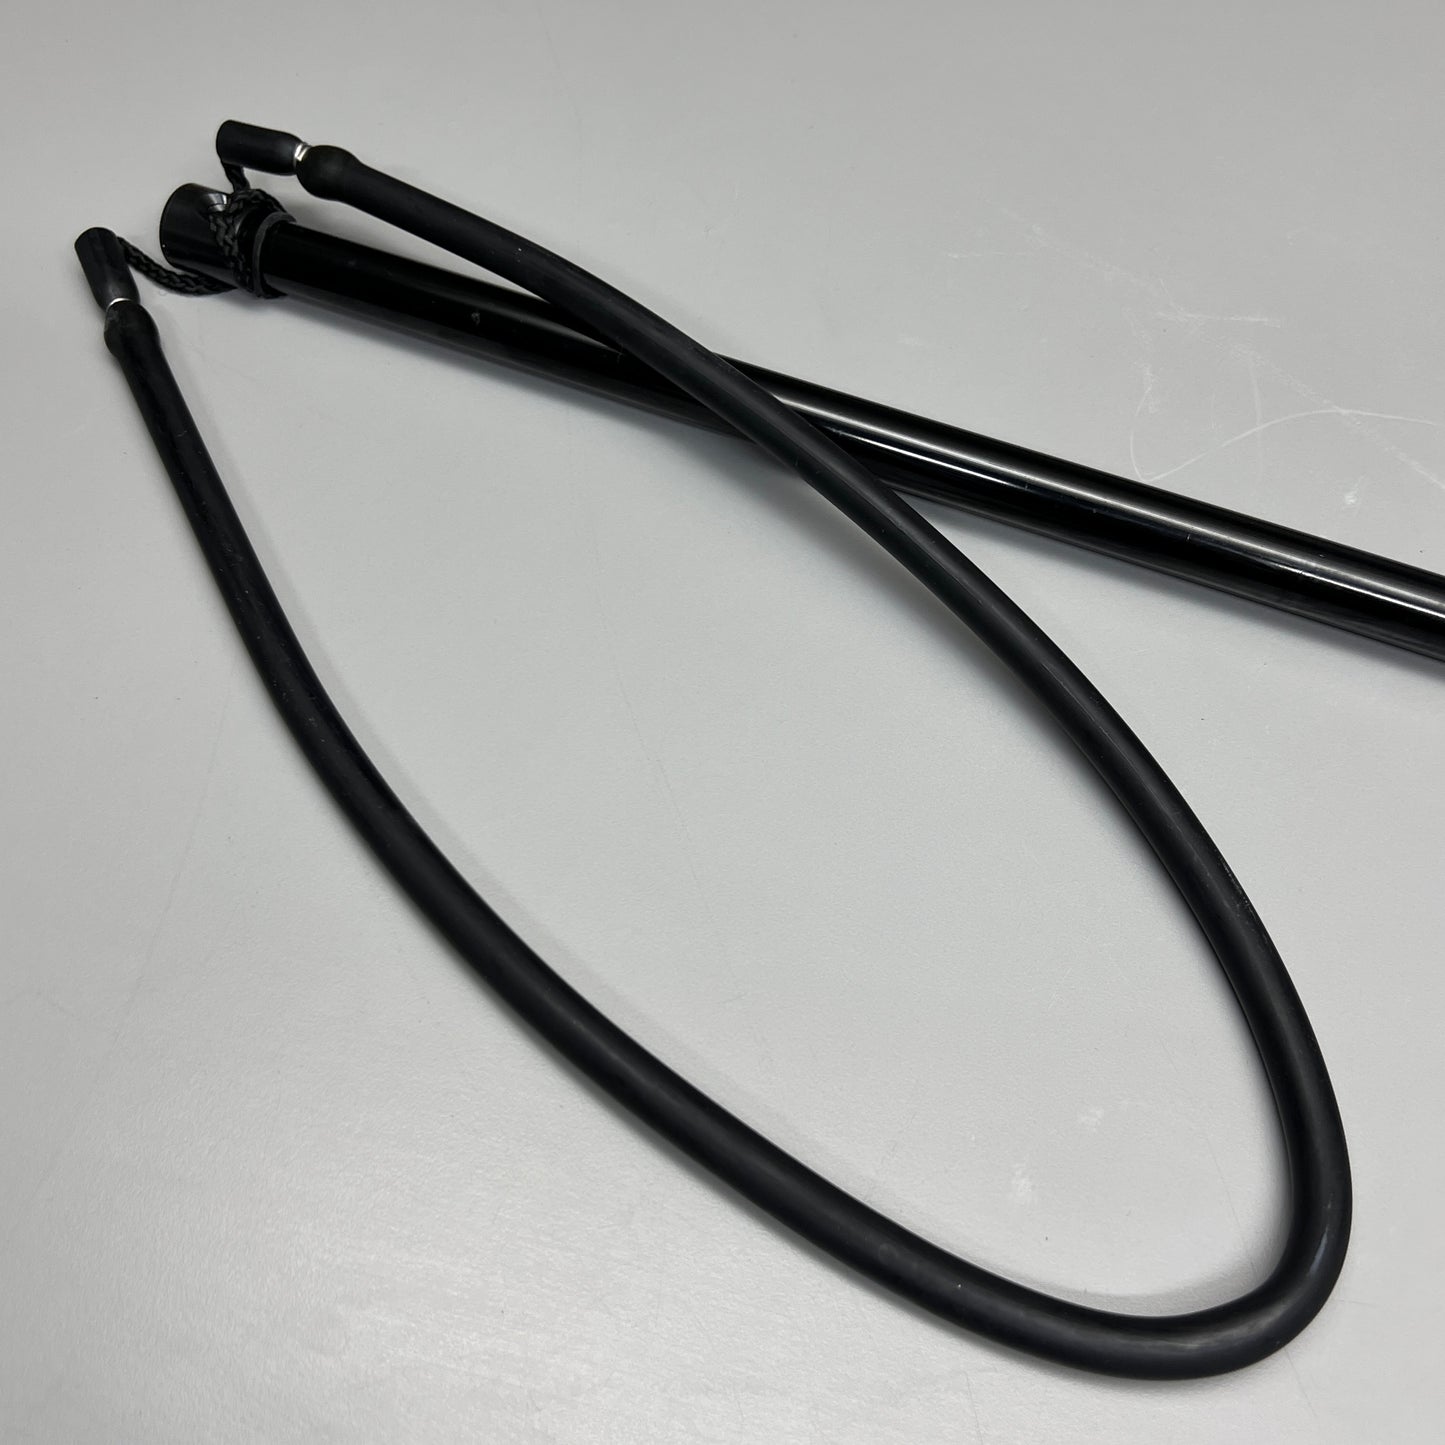 CRESSI Aluminum Pole Spear w/ Paralyzer Tip 3pcs - 6.0 ft Black USX040000 (New)